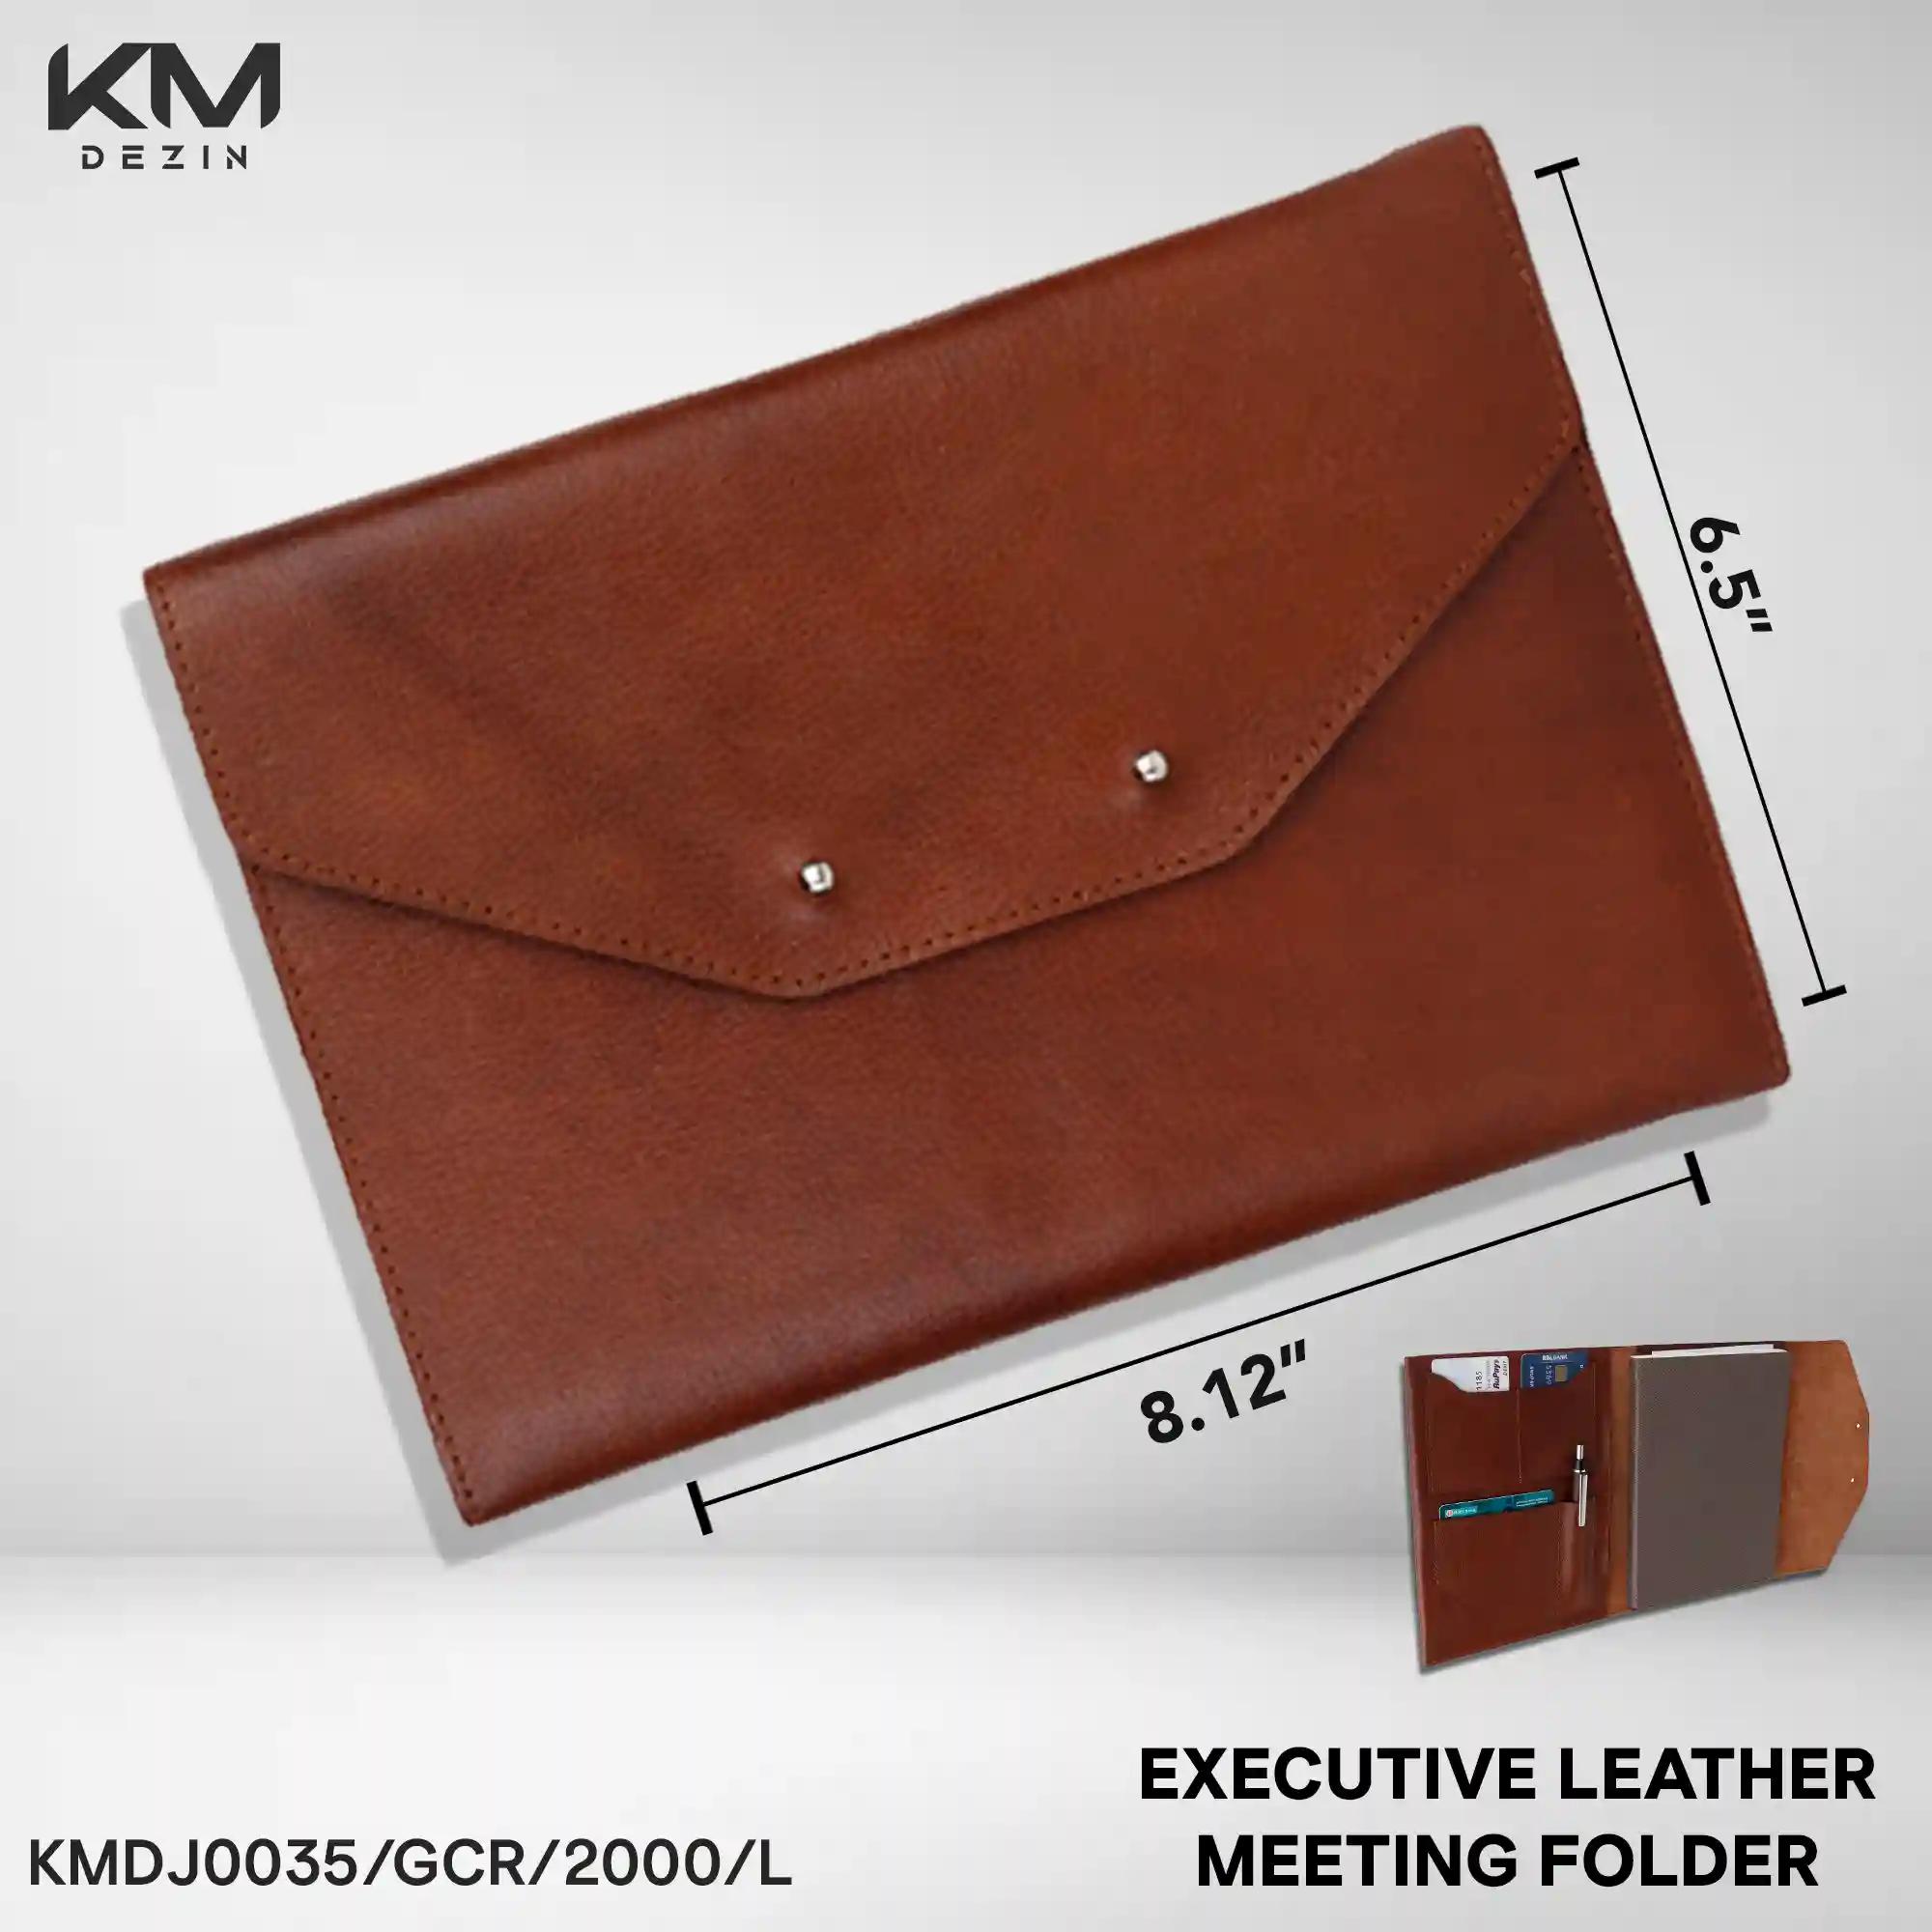 Executive Leather Meeting Folder